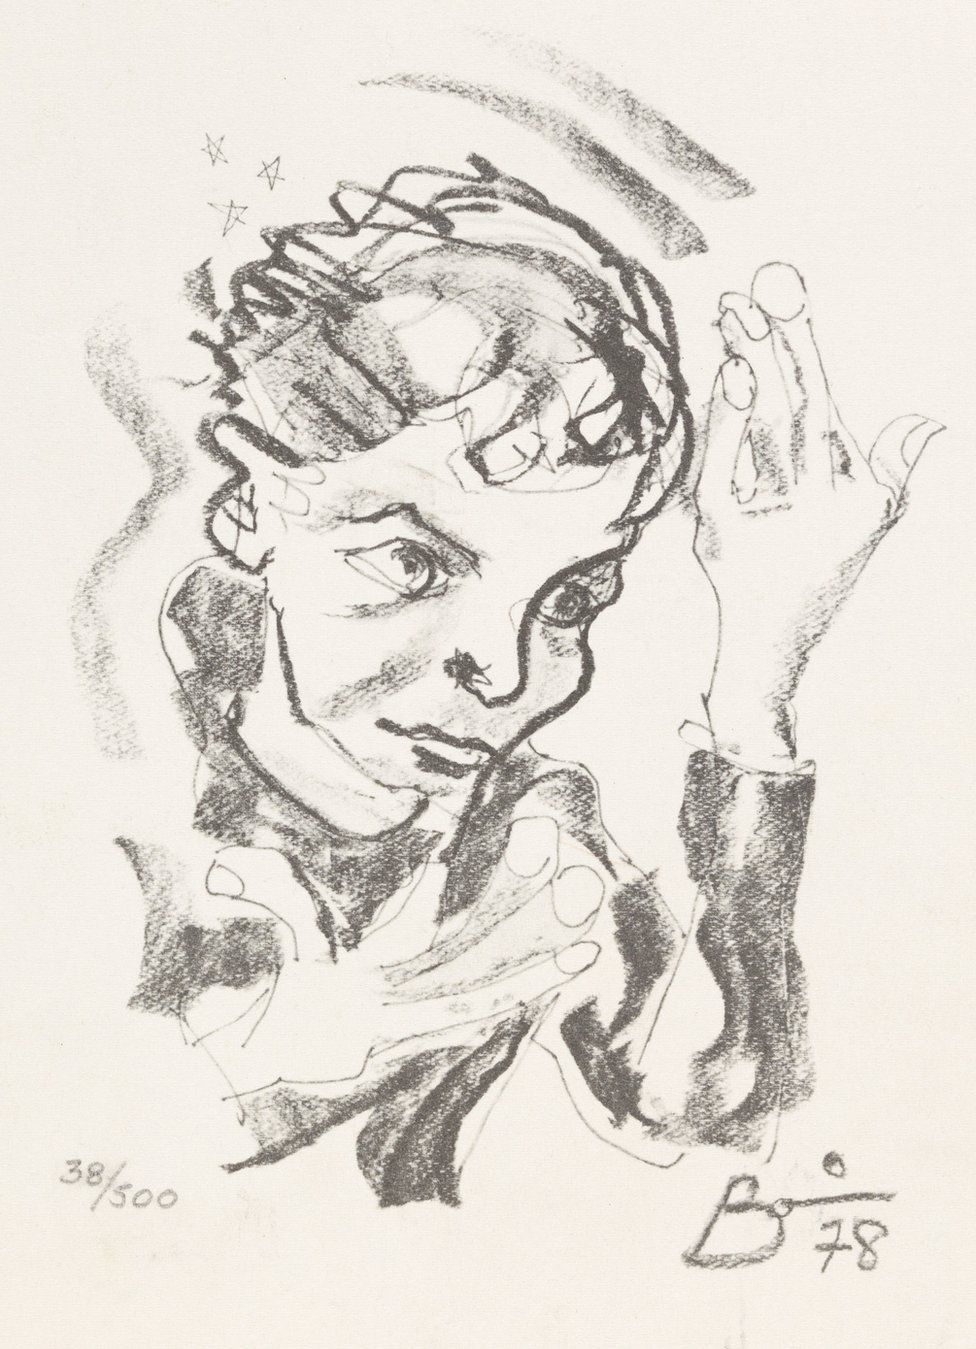 A self-portrait sketch by David Bowie